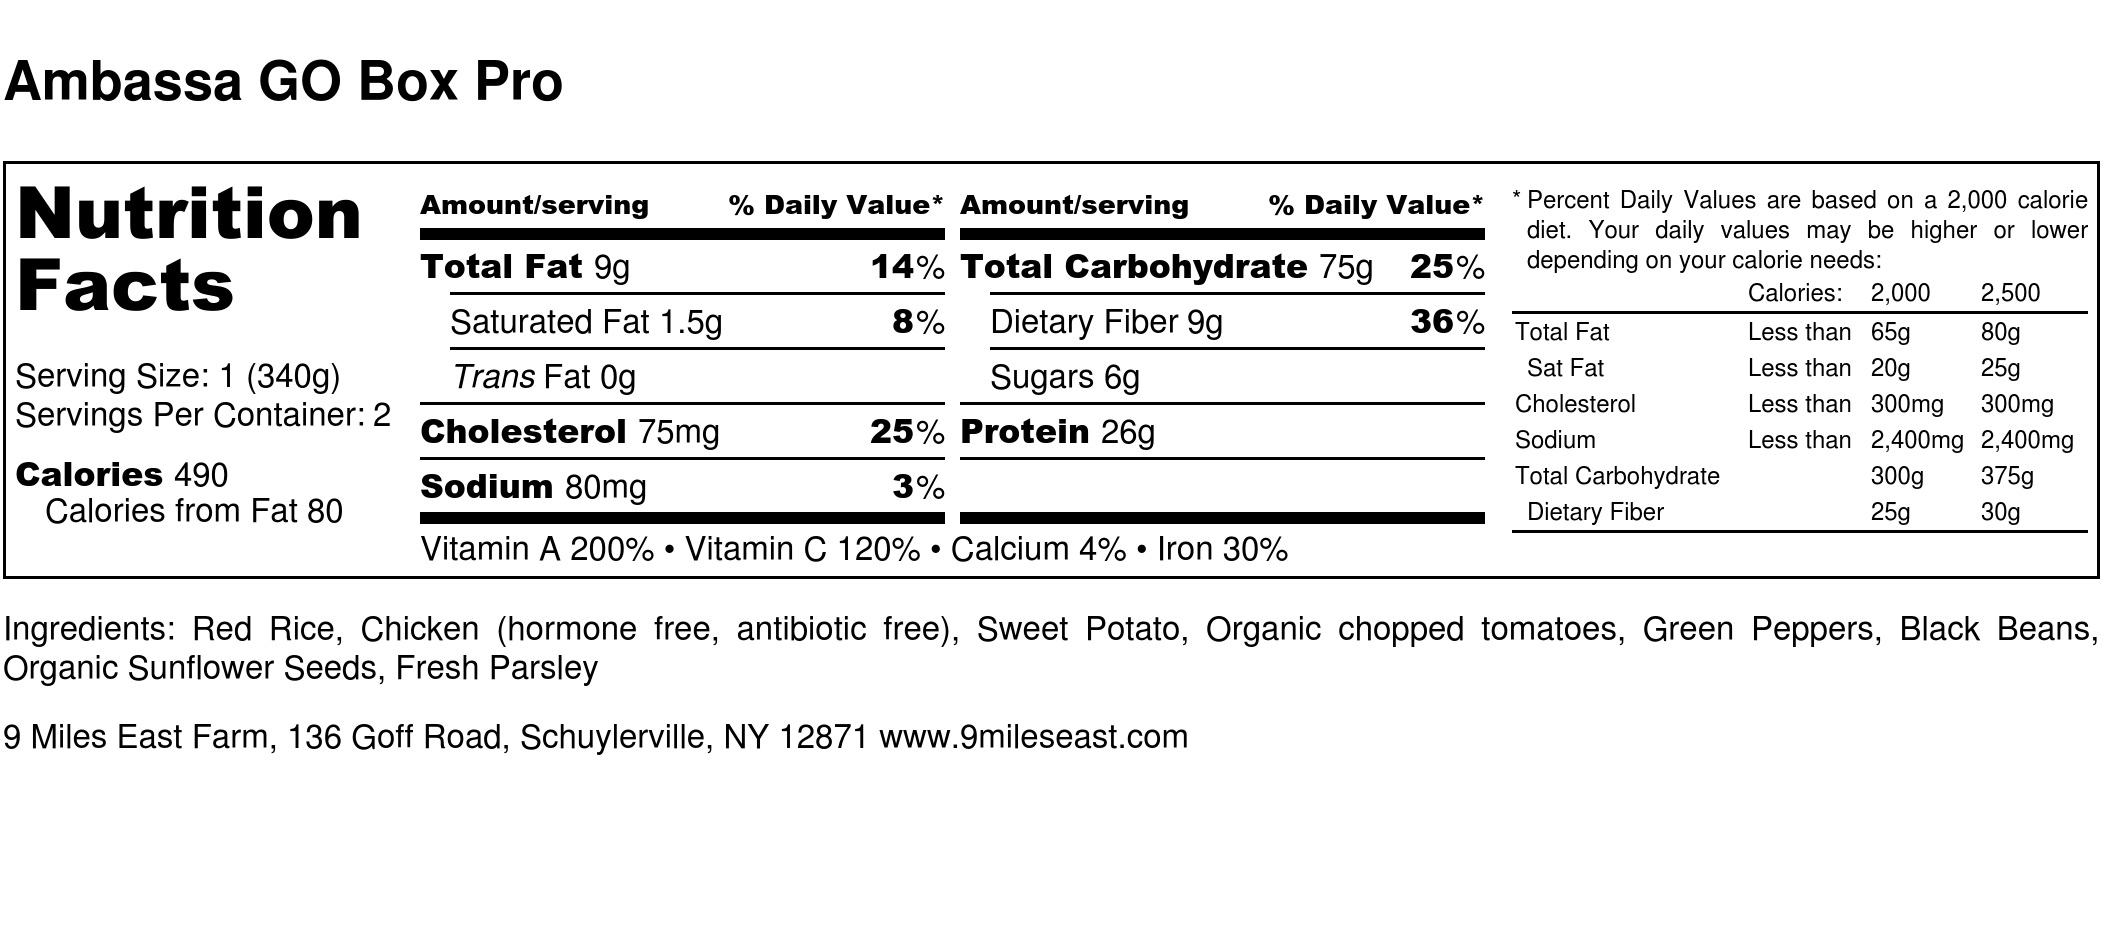 Ambassa GO Box Pro - Nutrition Label.jpg